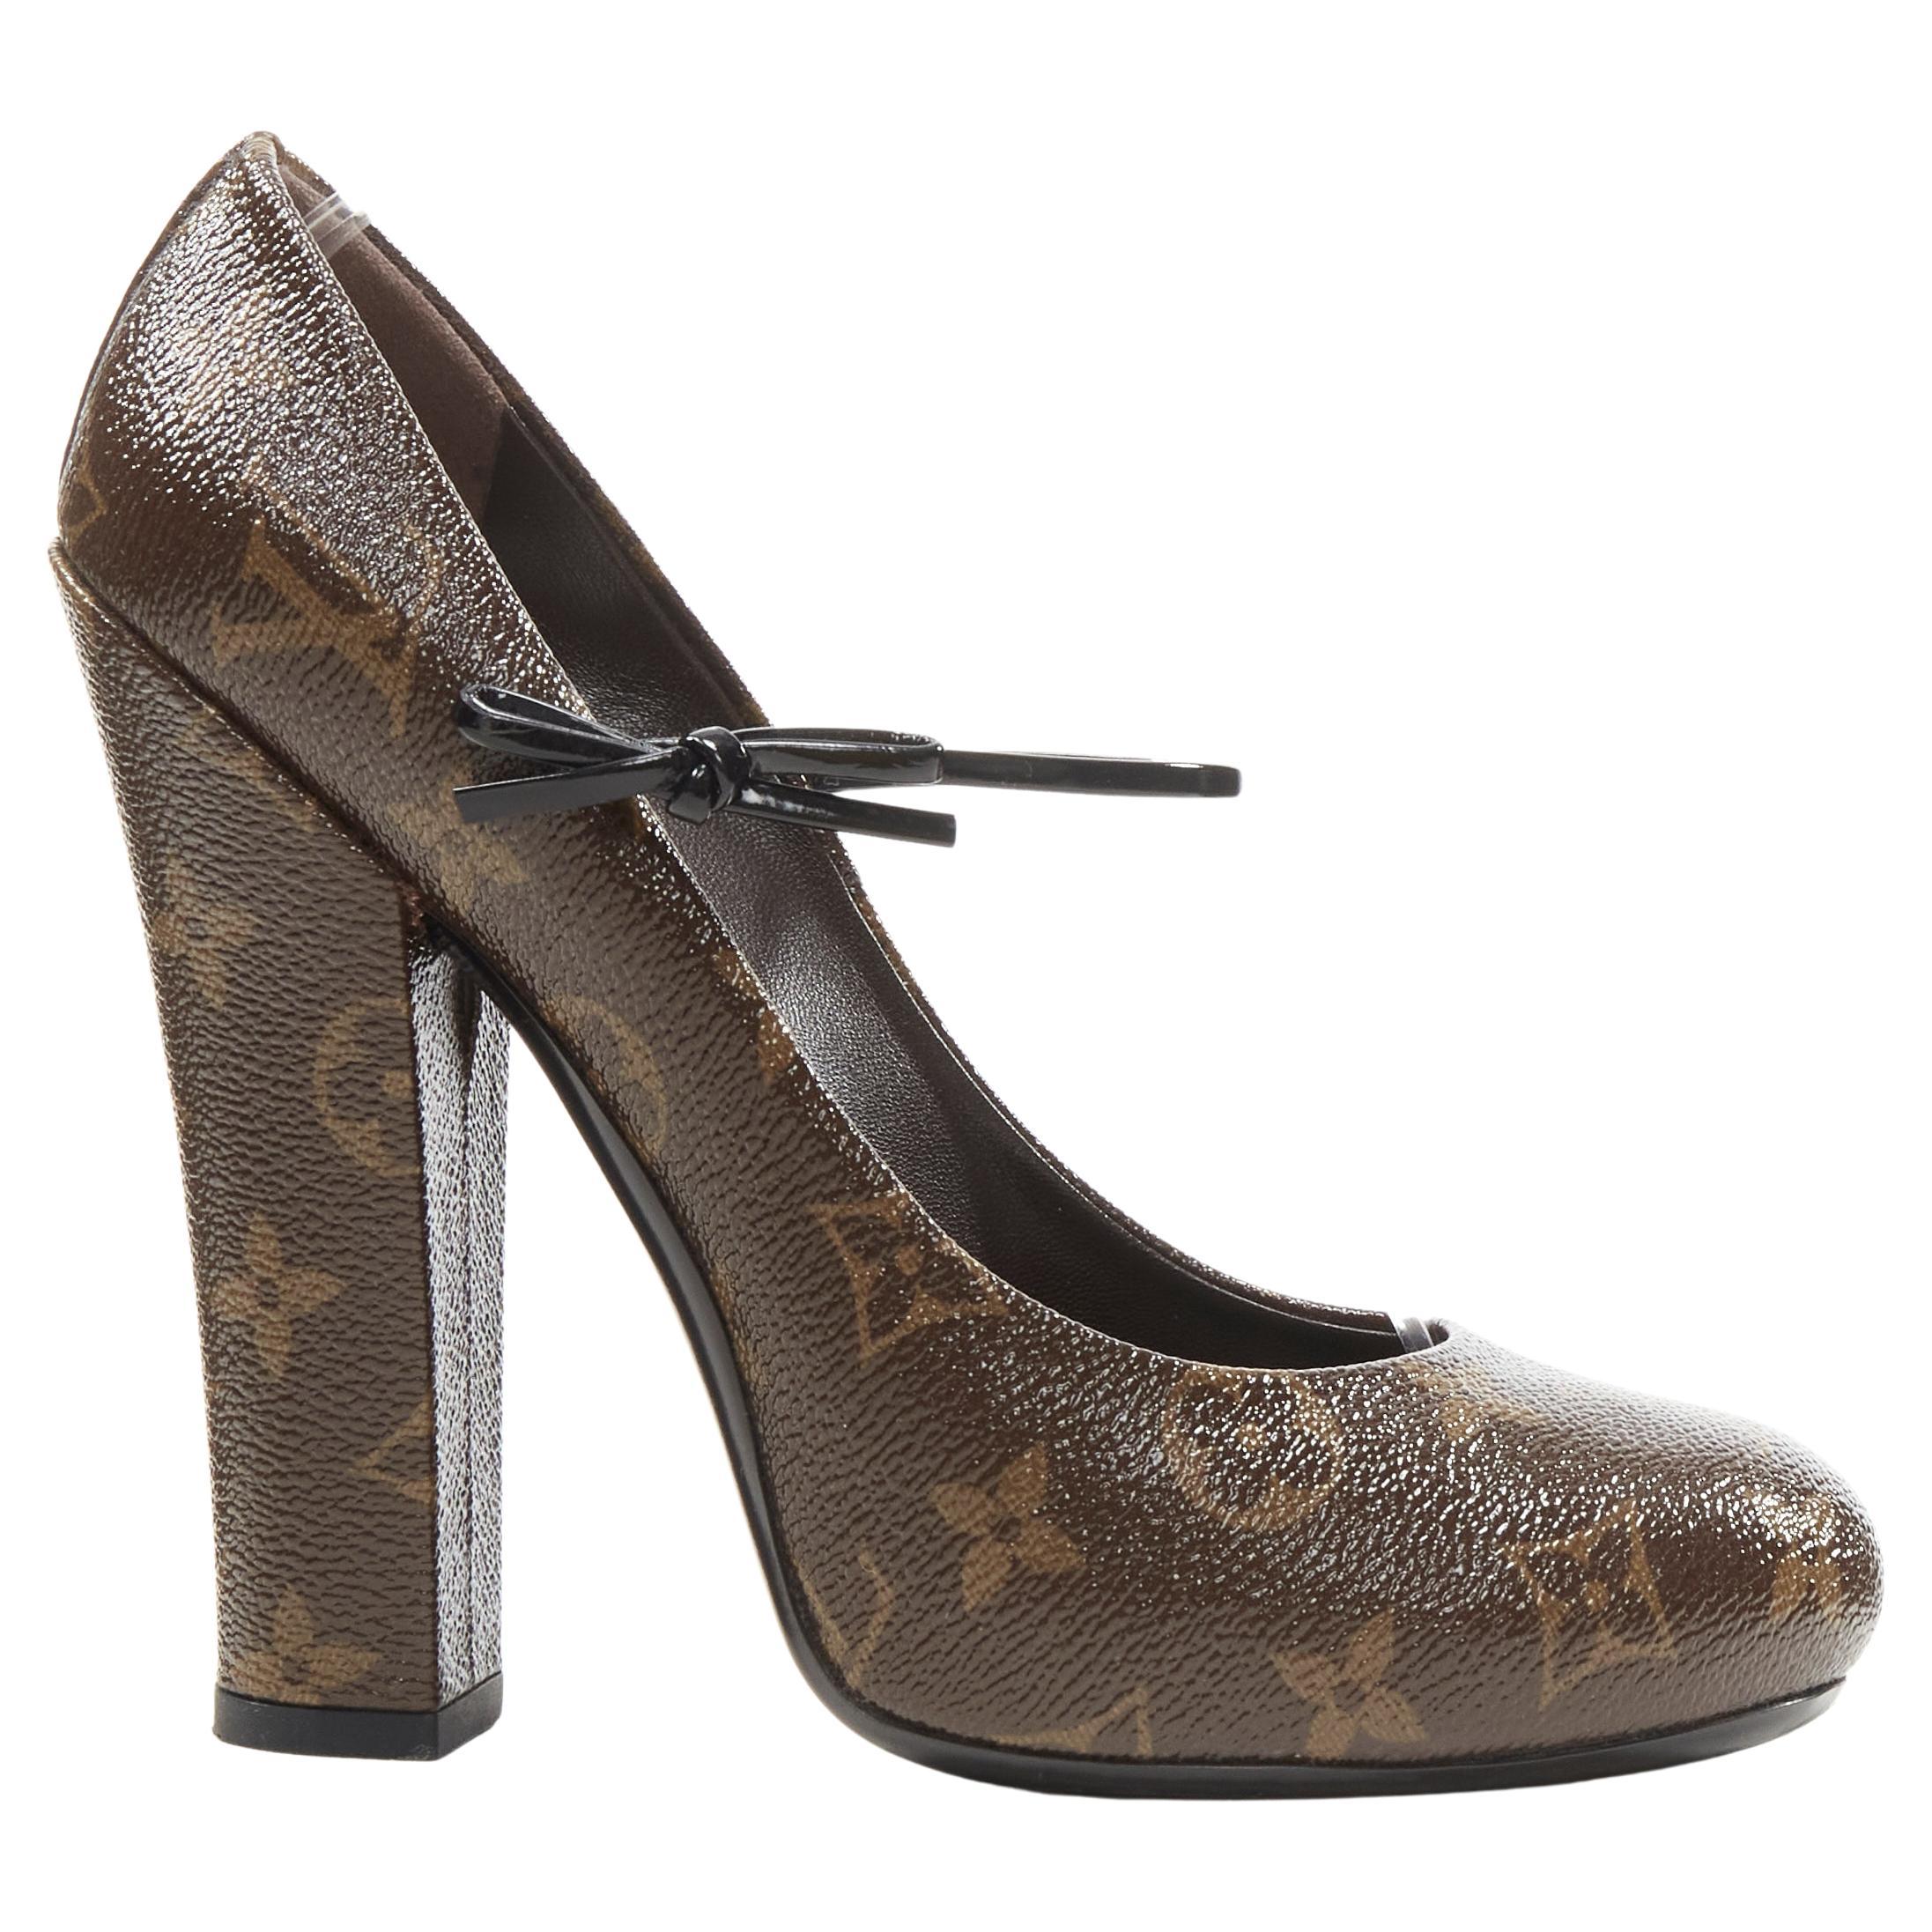 LV giraffe heels  Heels, Animal shoes, Louis vuitton heels